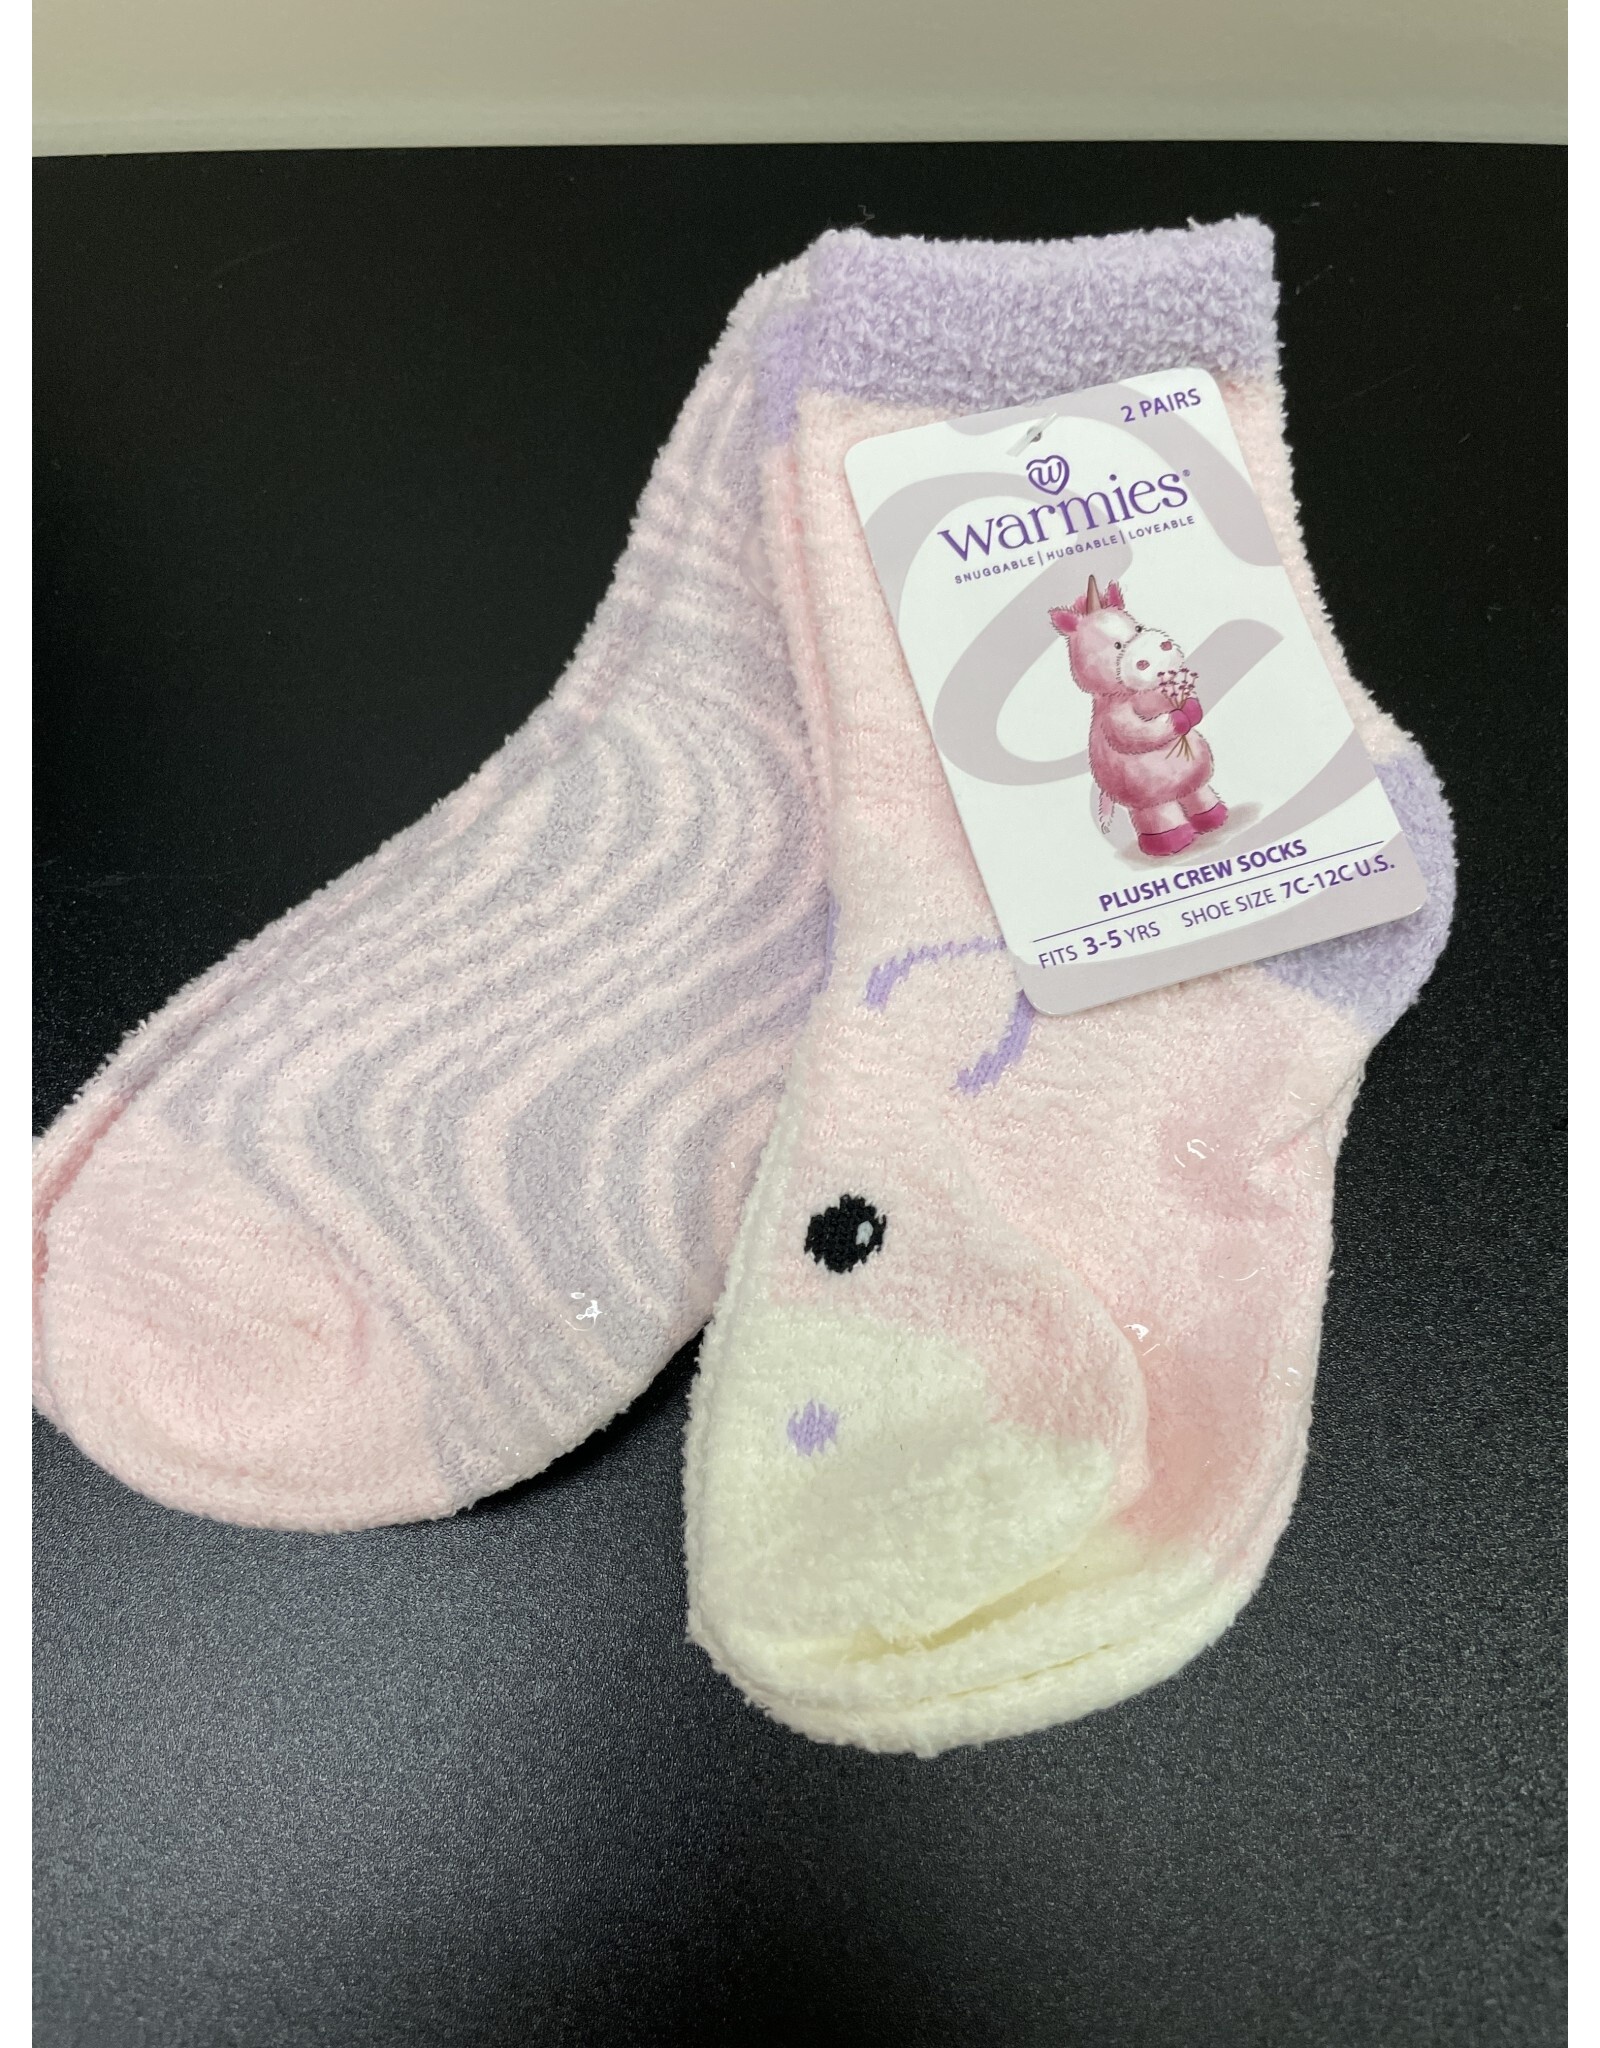 Unicorn plush socks 3-5 yrs